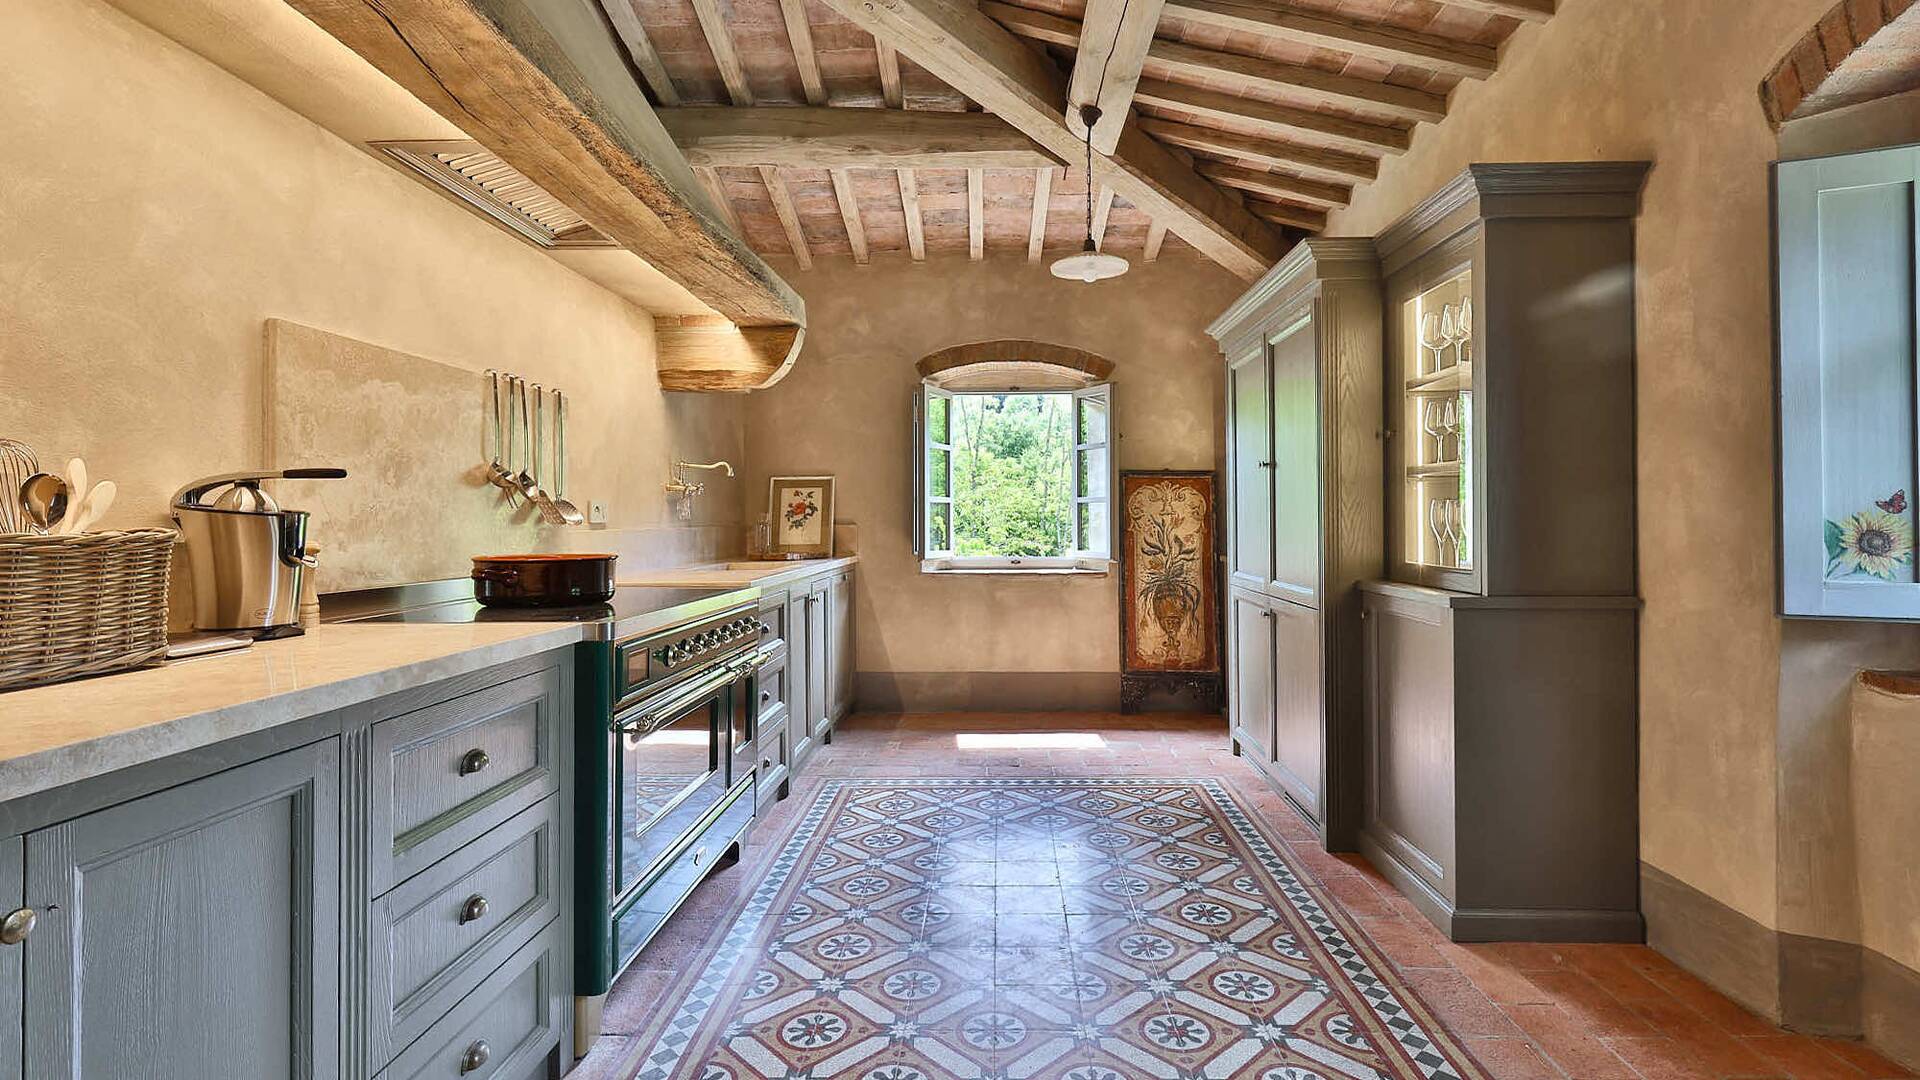 kitchen with original floors